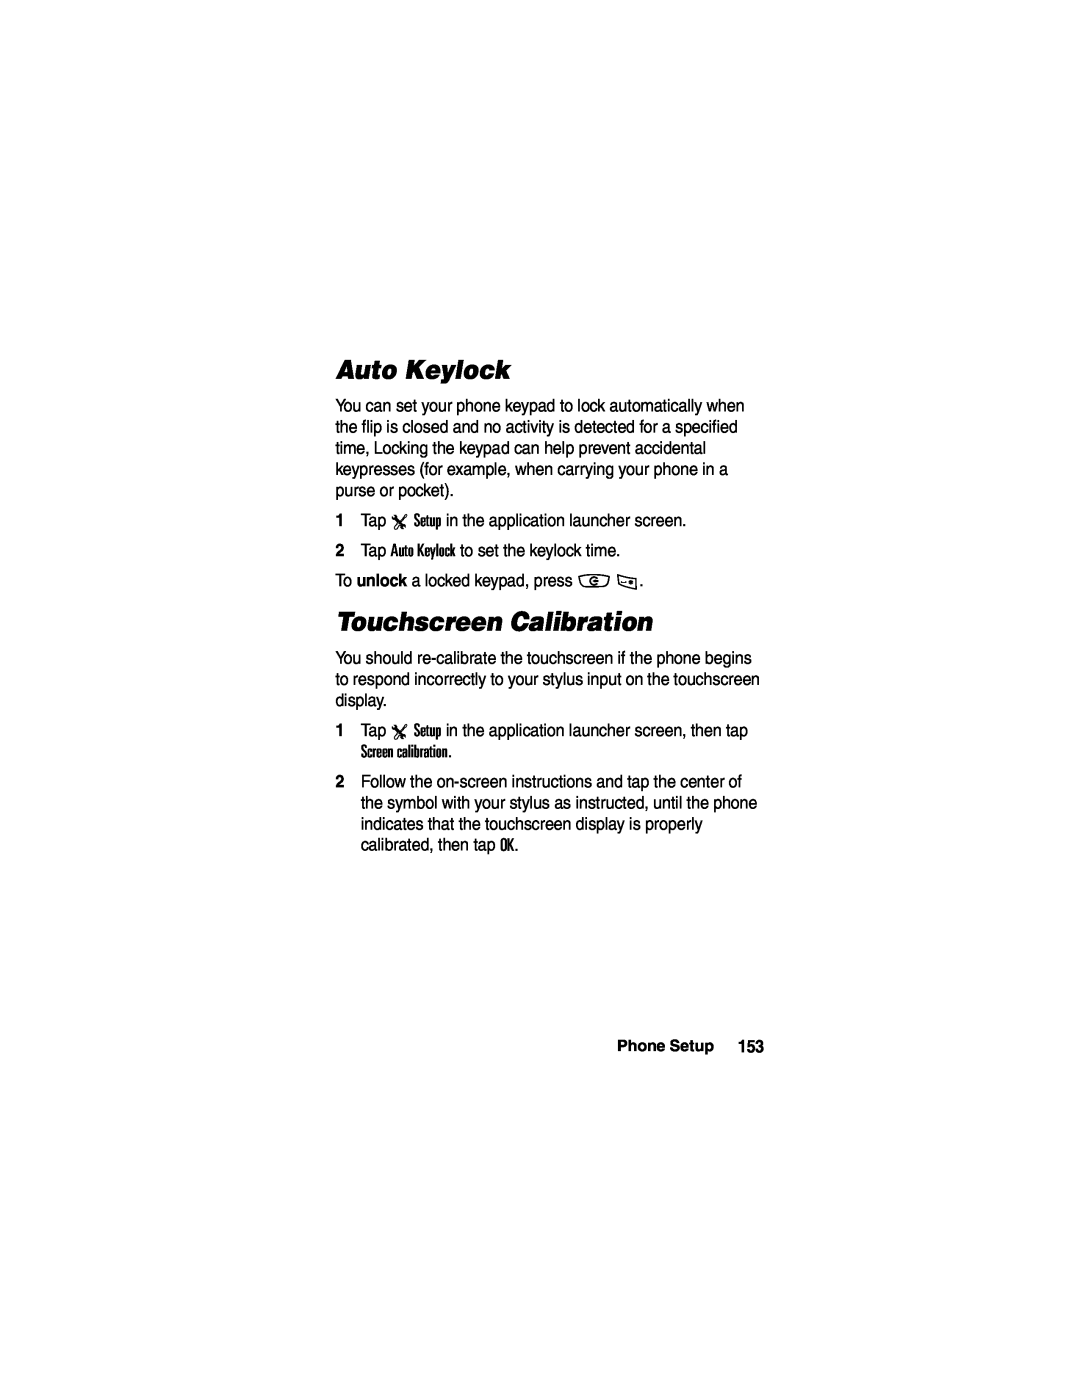 Motorola A780 manual Auto Keylock, Touchscreen Calibration, Screen calibration 